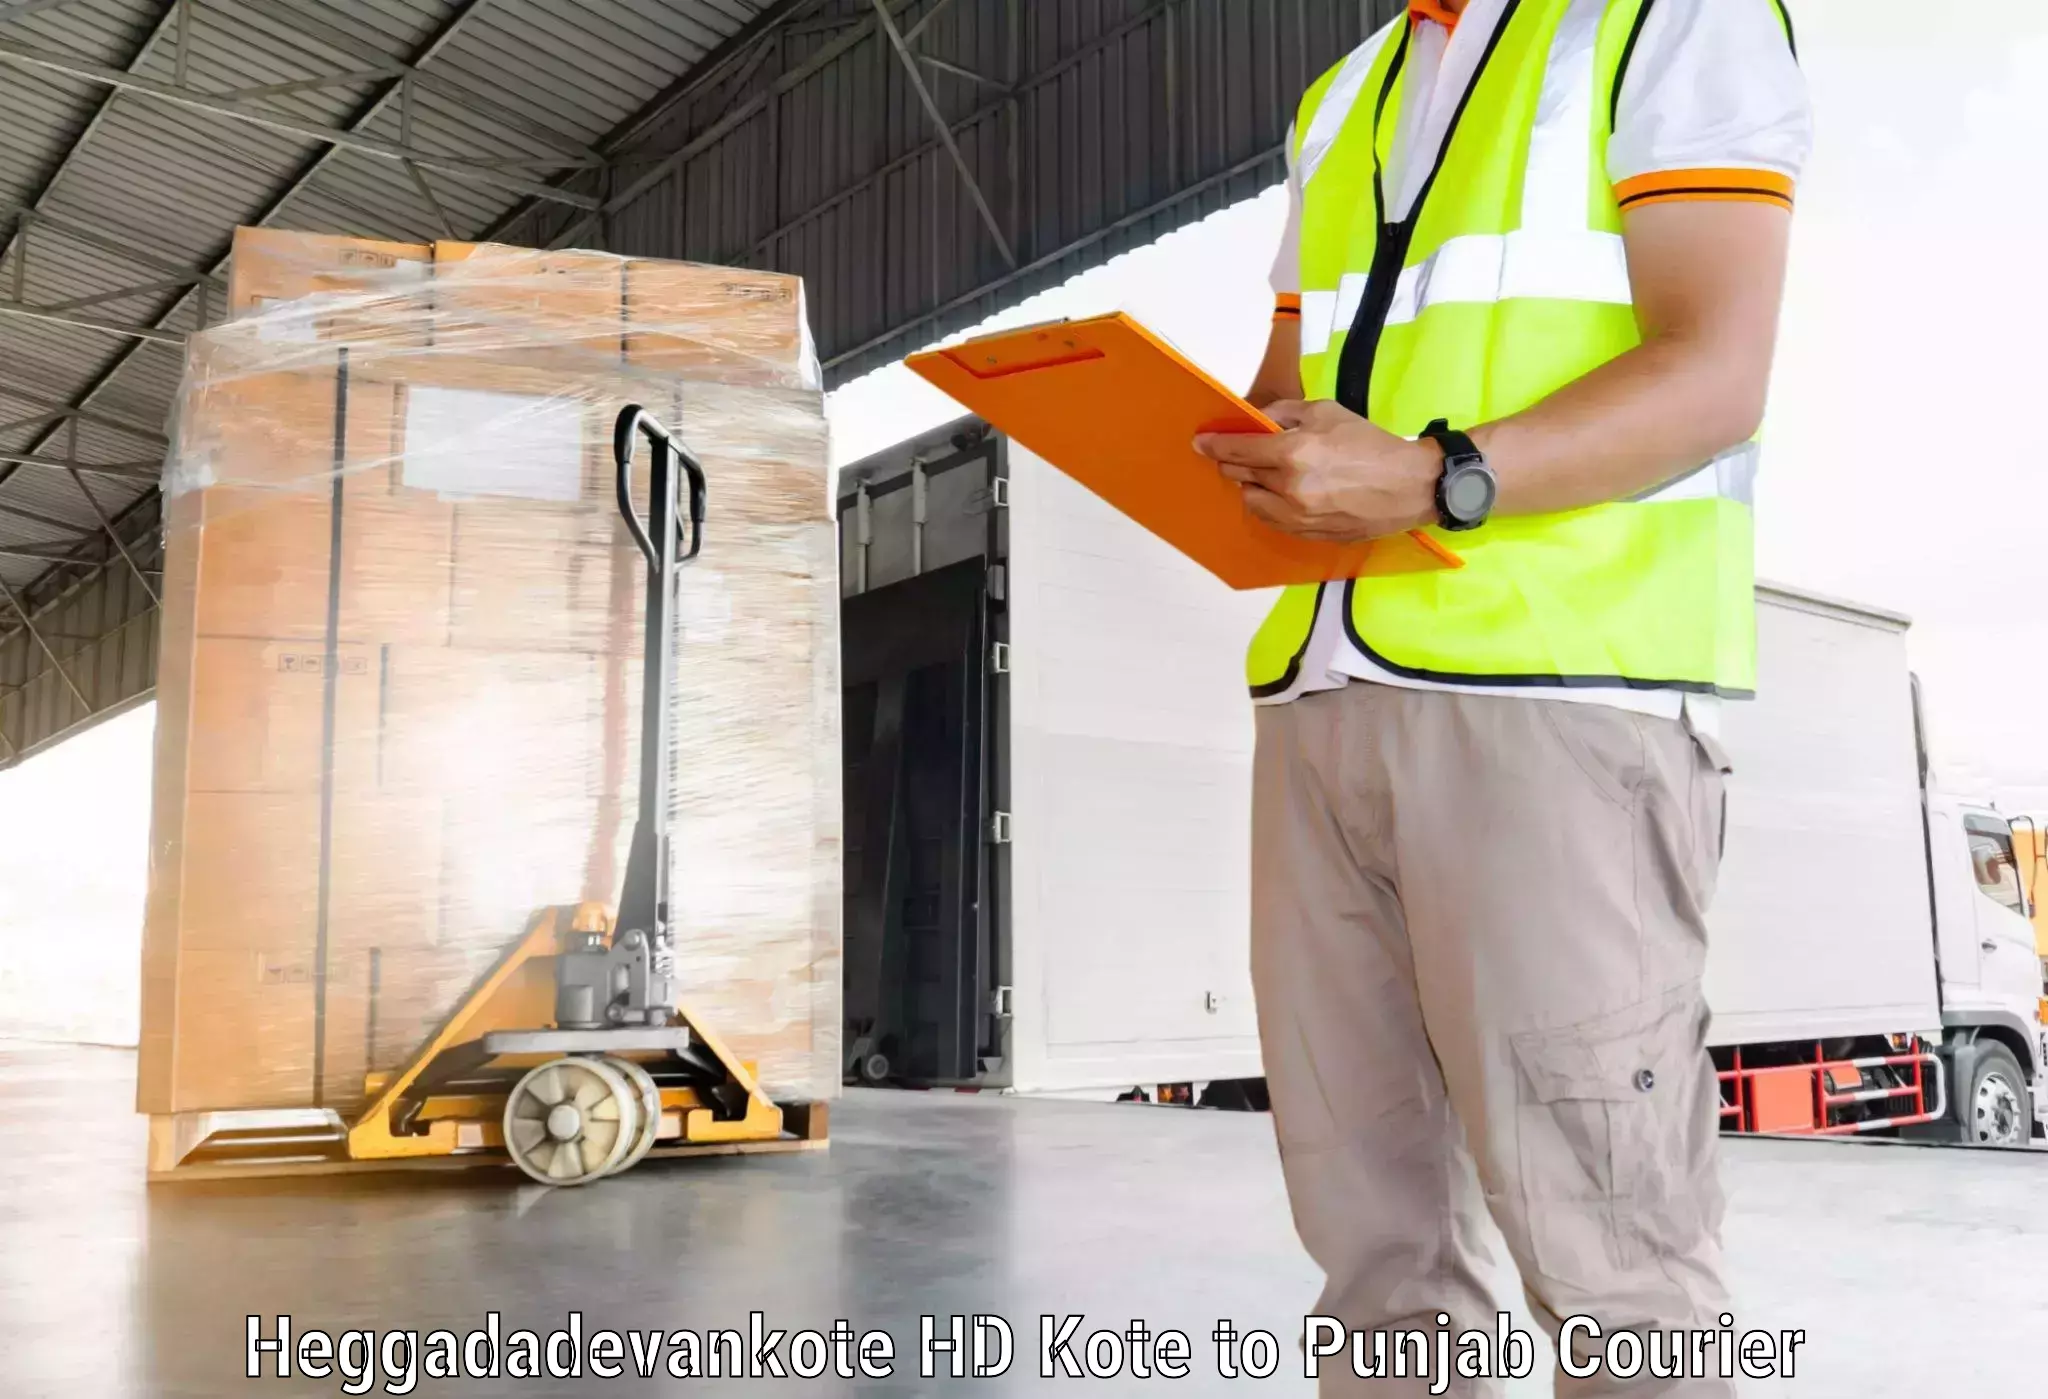 Global logistics network Heggadadevankote HD Kote to Zirakpur